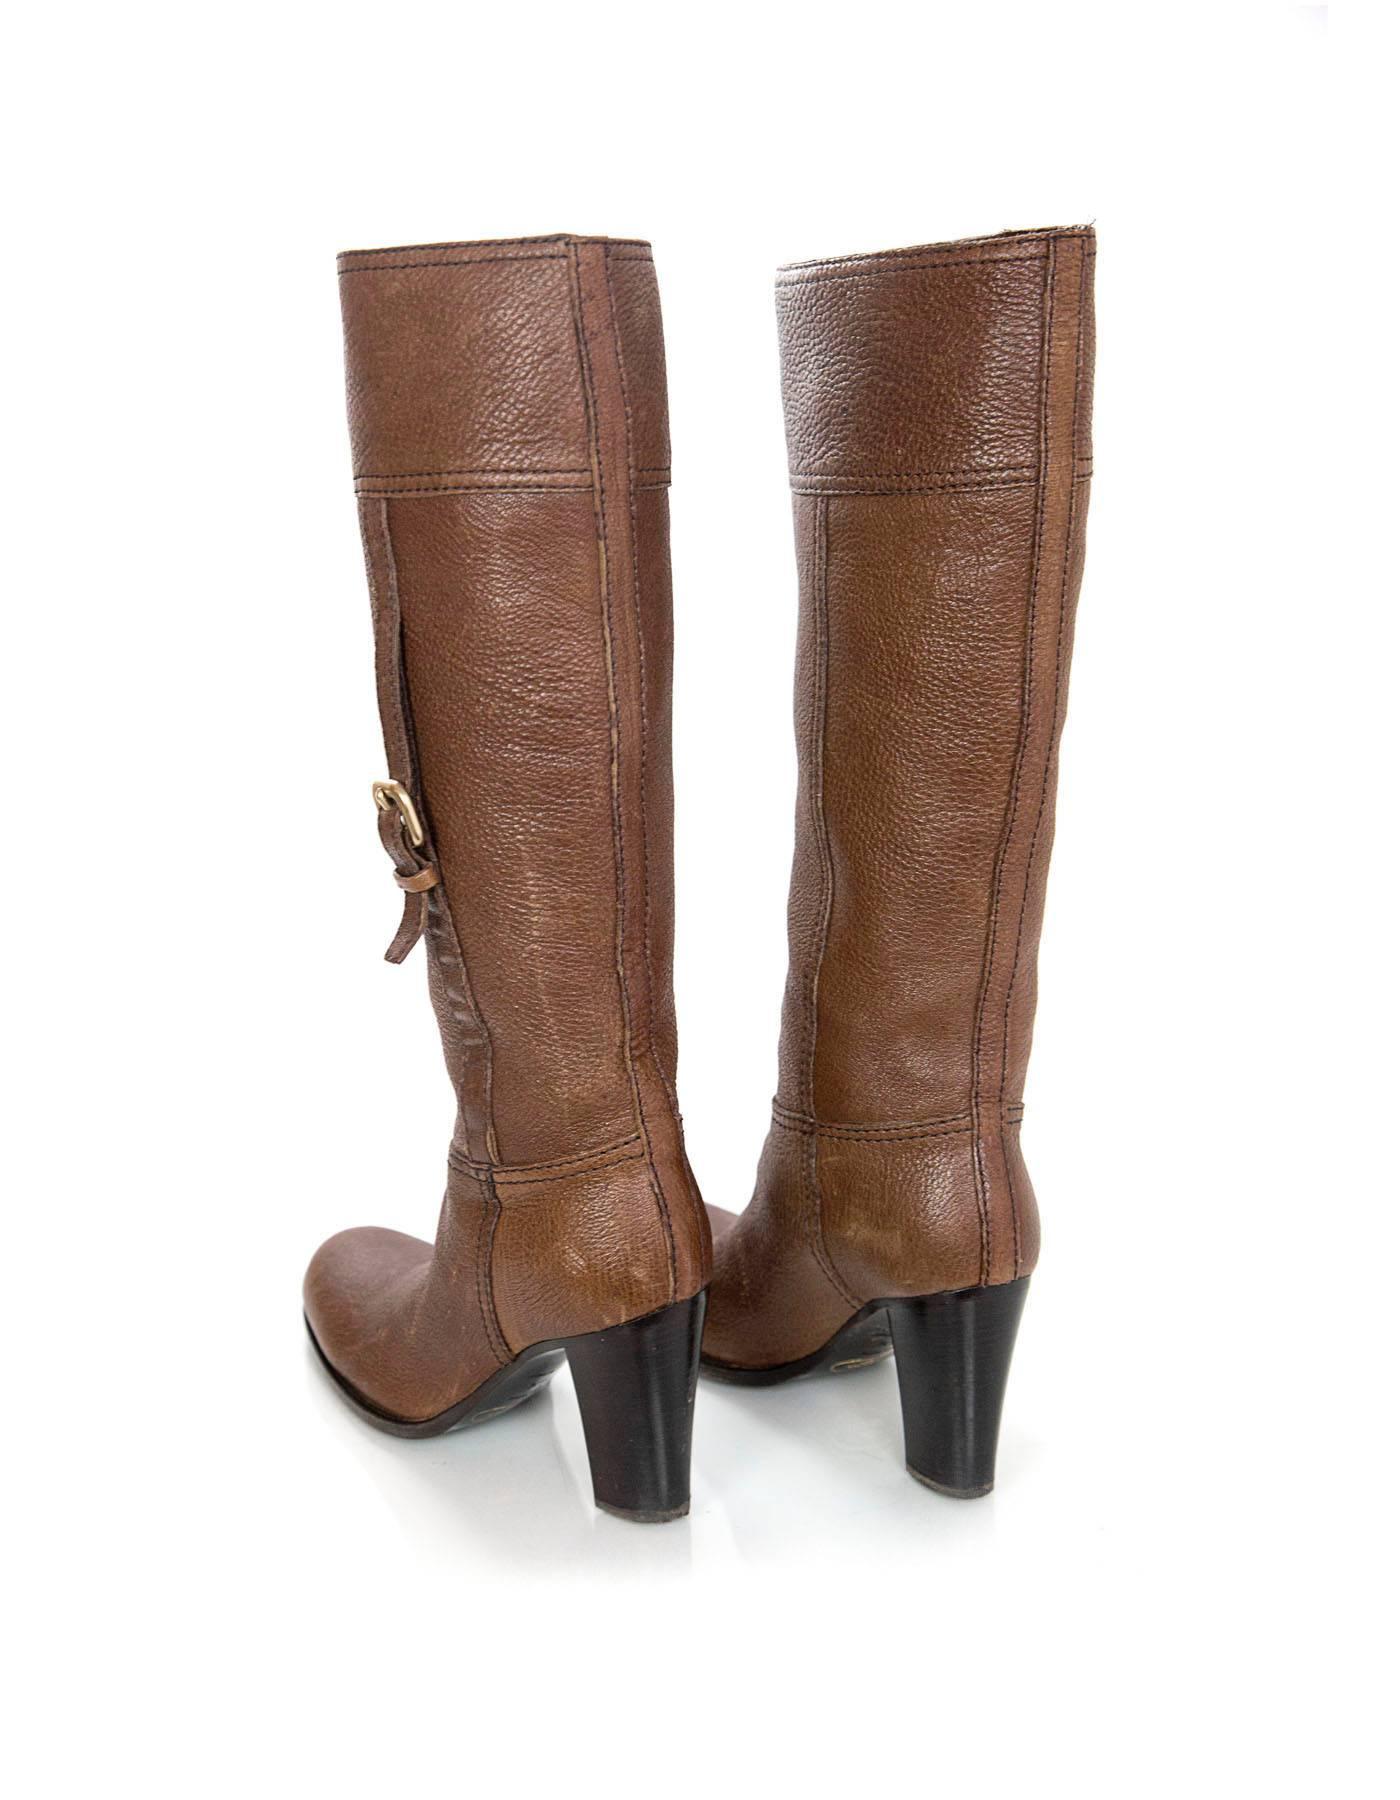 Prada Brown Leather Heeled Boots sz 36.5 1